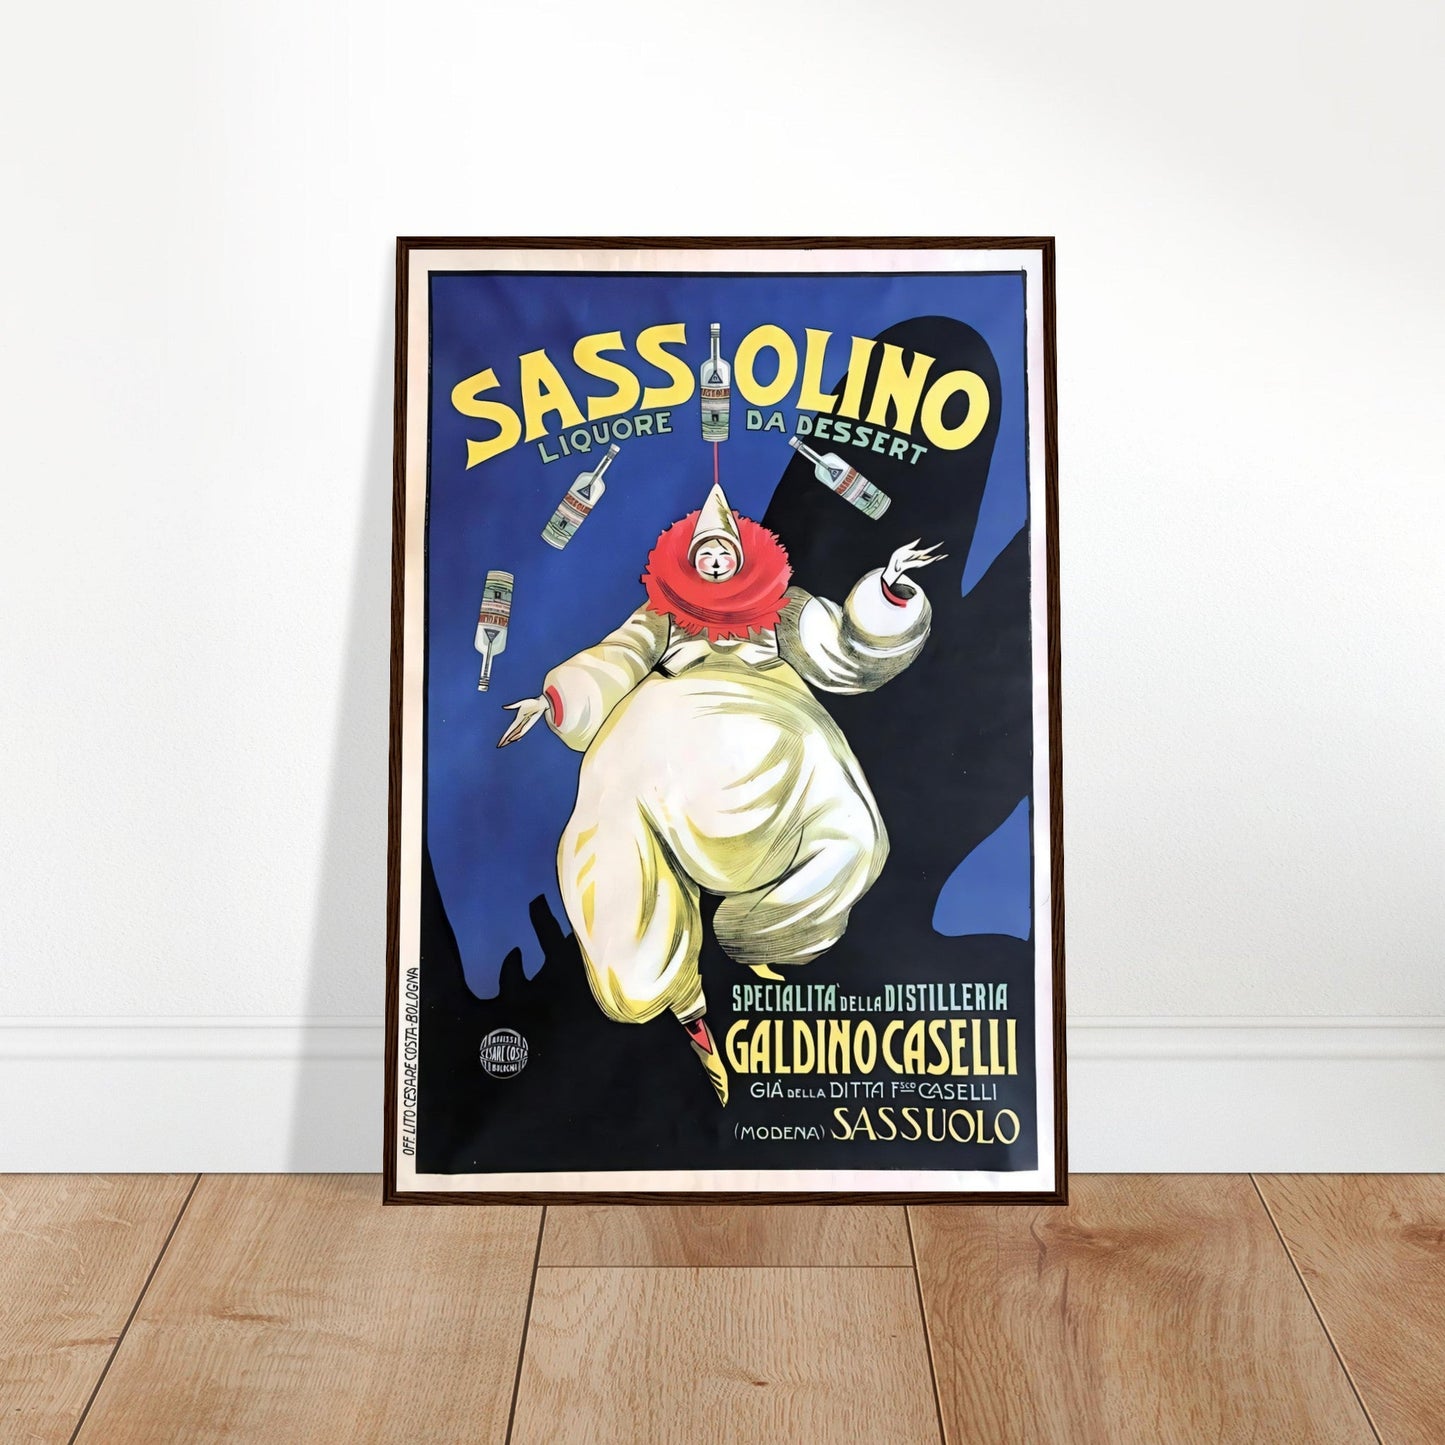 Sassolino Vintage Poster Reprint on Premium matte Paper - Posterify